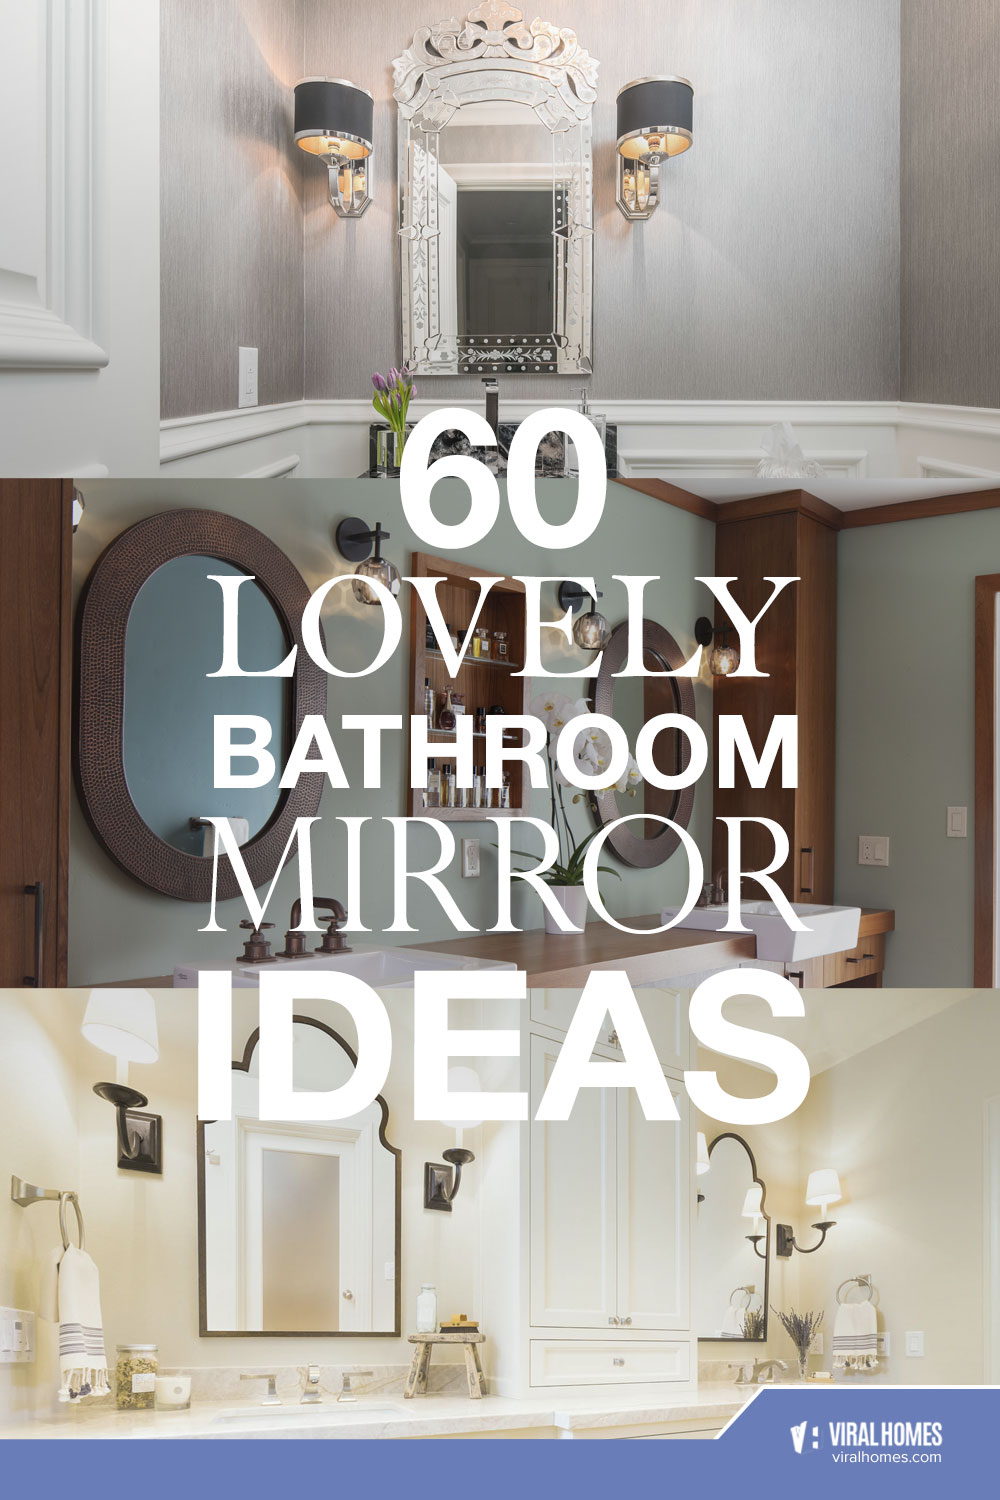 Lovely Bathroom Mirror Ideas to Accessorize your Bath